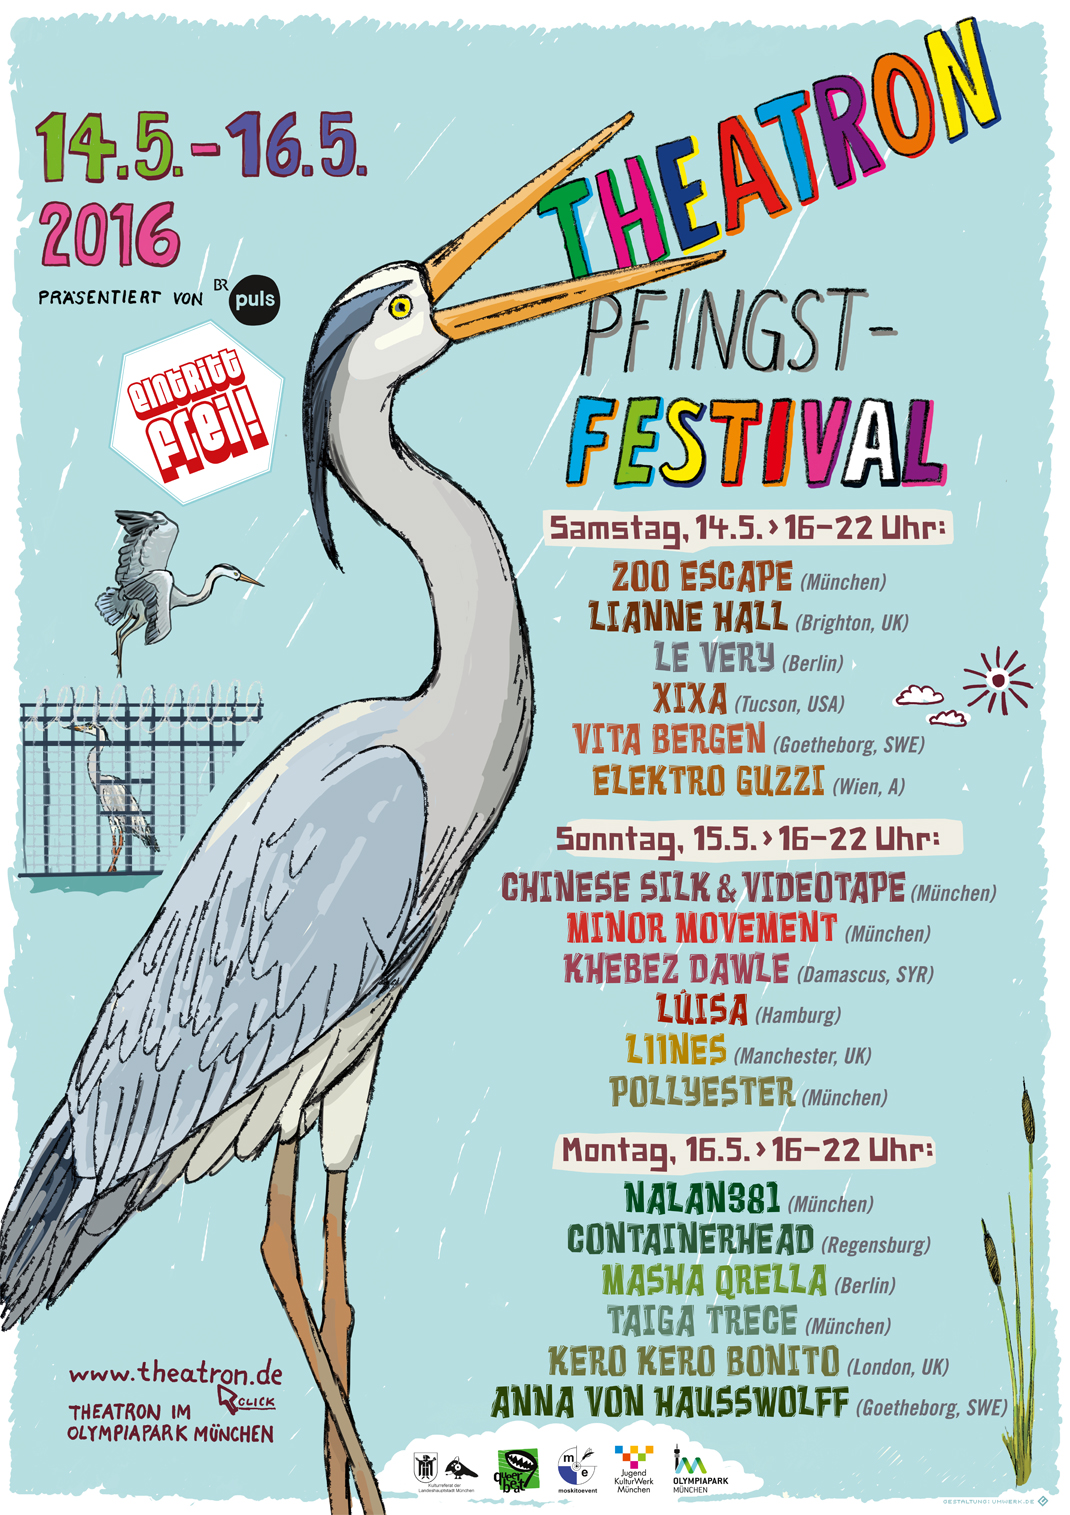 Pentecost Music Festival / Theatron Pfingstfestival 2016